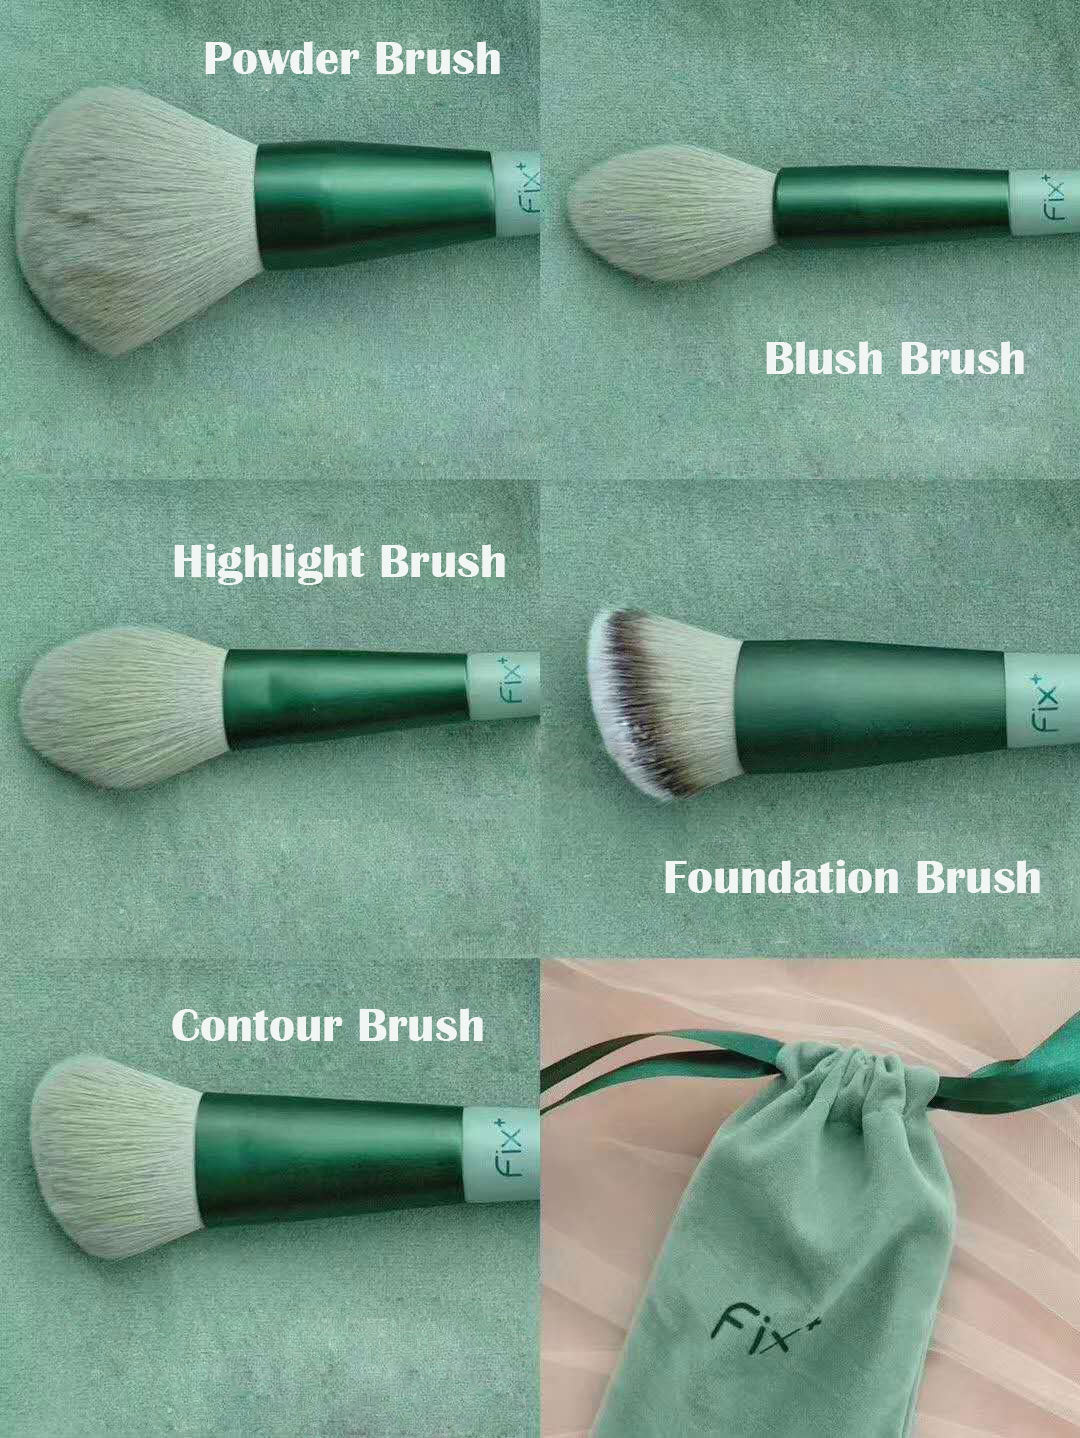 Professional Makeup Kits Eyeshadow Brushes Concealer Brush